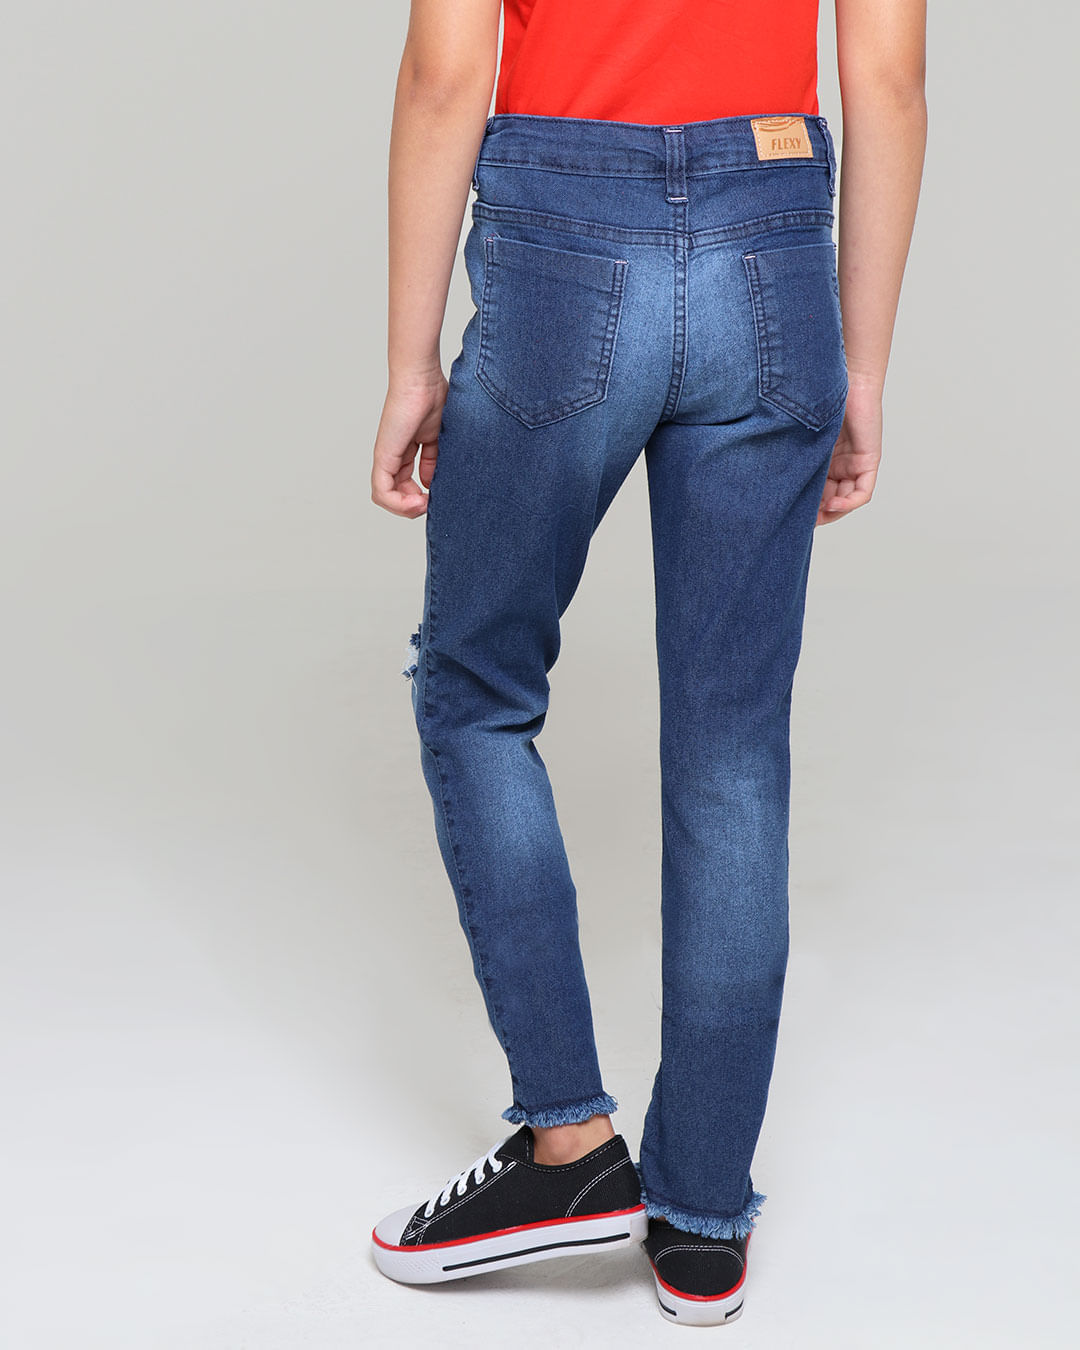 Calca-Jeans-Juvenil-Skinny-Destroyed-Azul